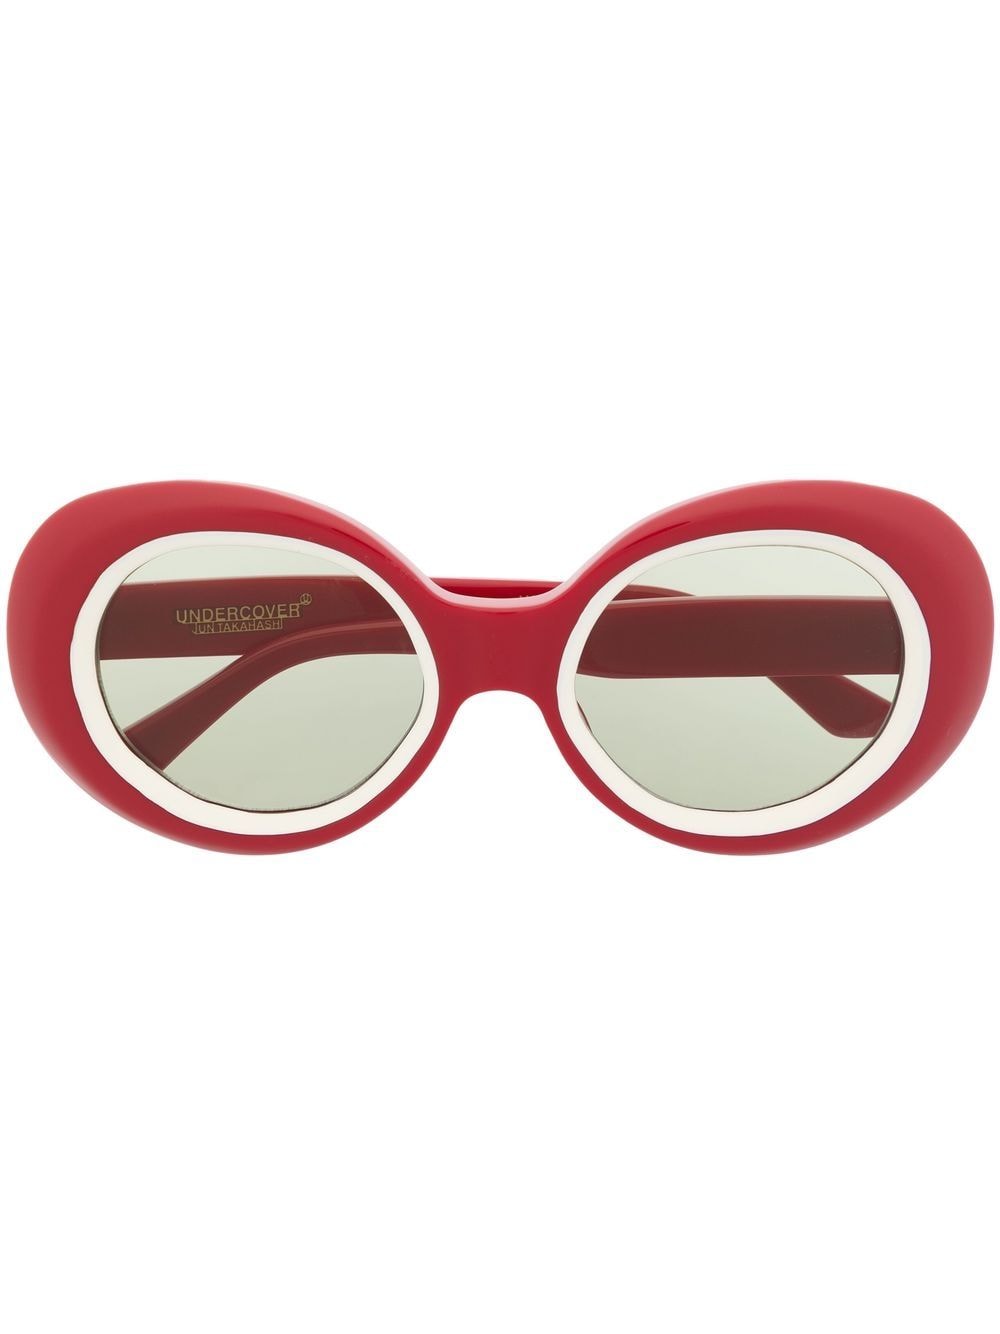 Undercover Effector oversized sunglasses - Red von Undercover